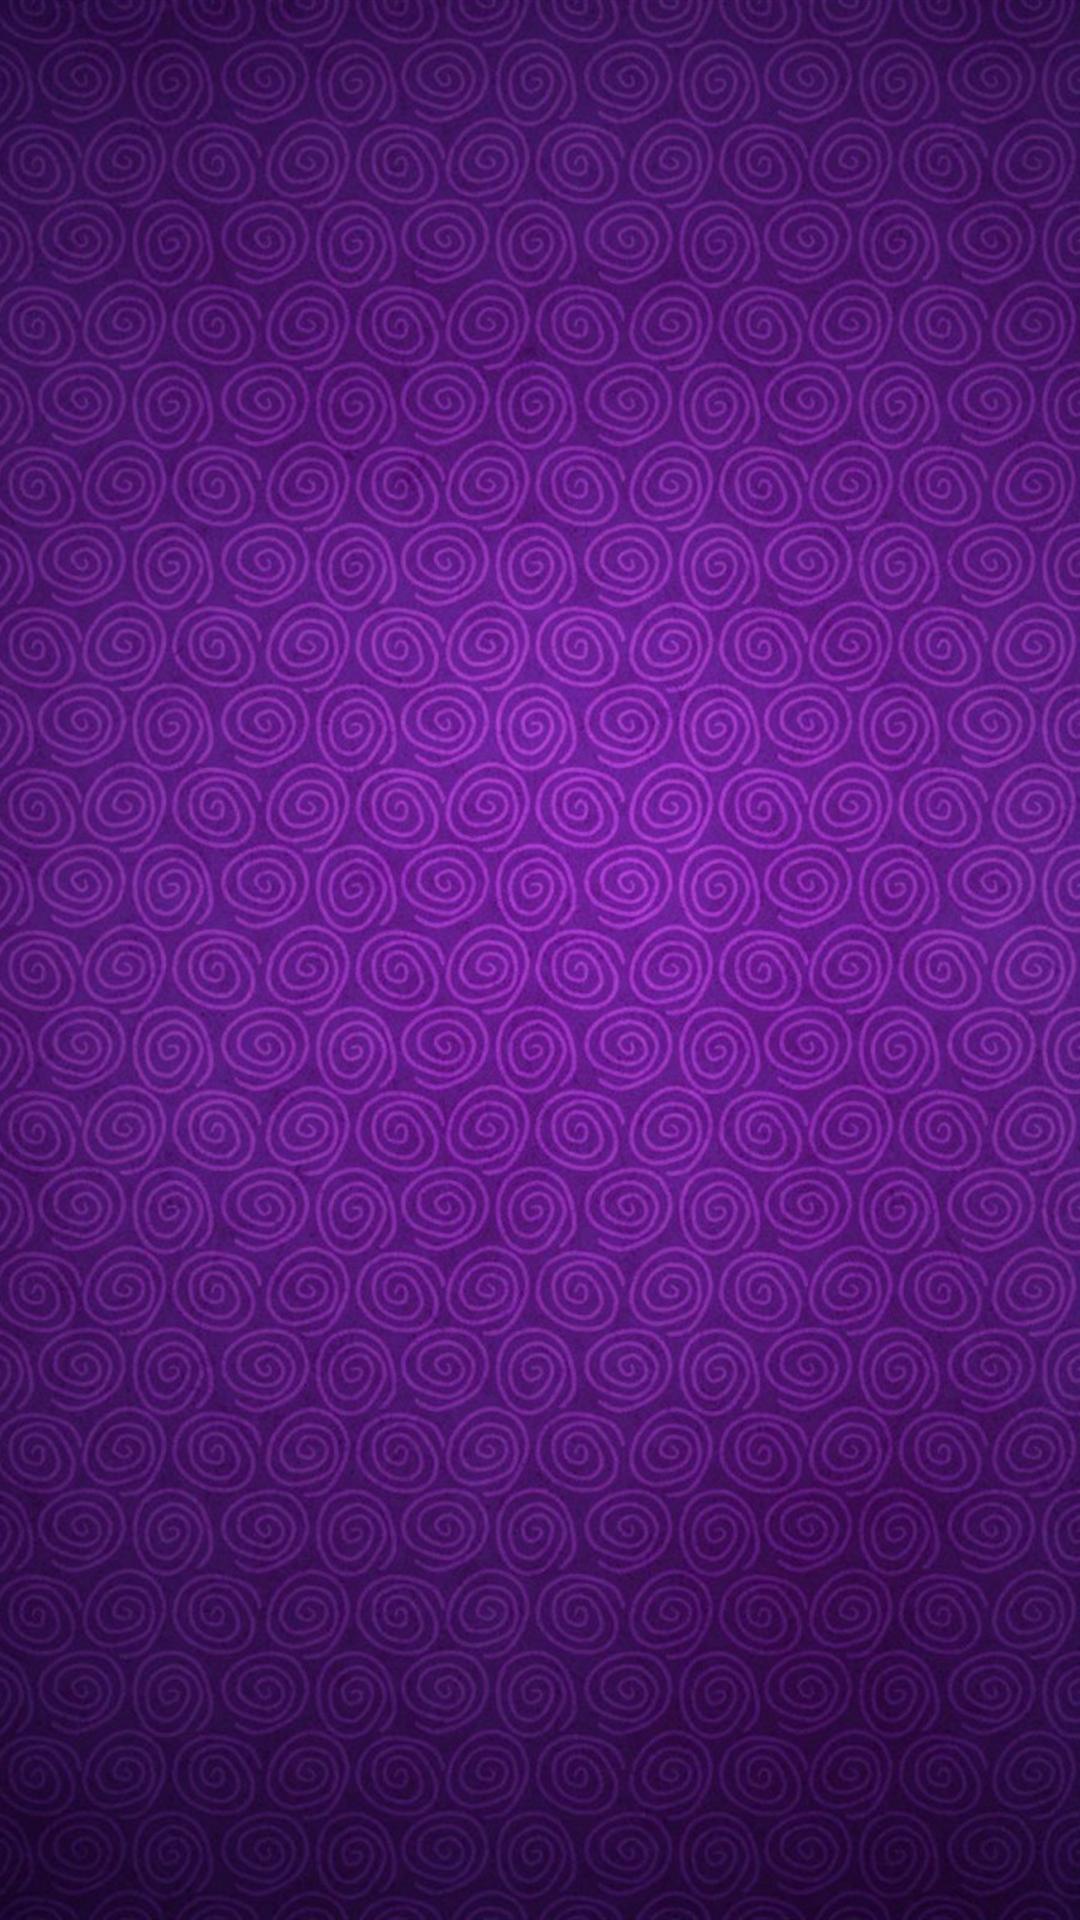 Spinning Twisting Dark Purple Wallpaper For iPhone Plus